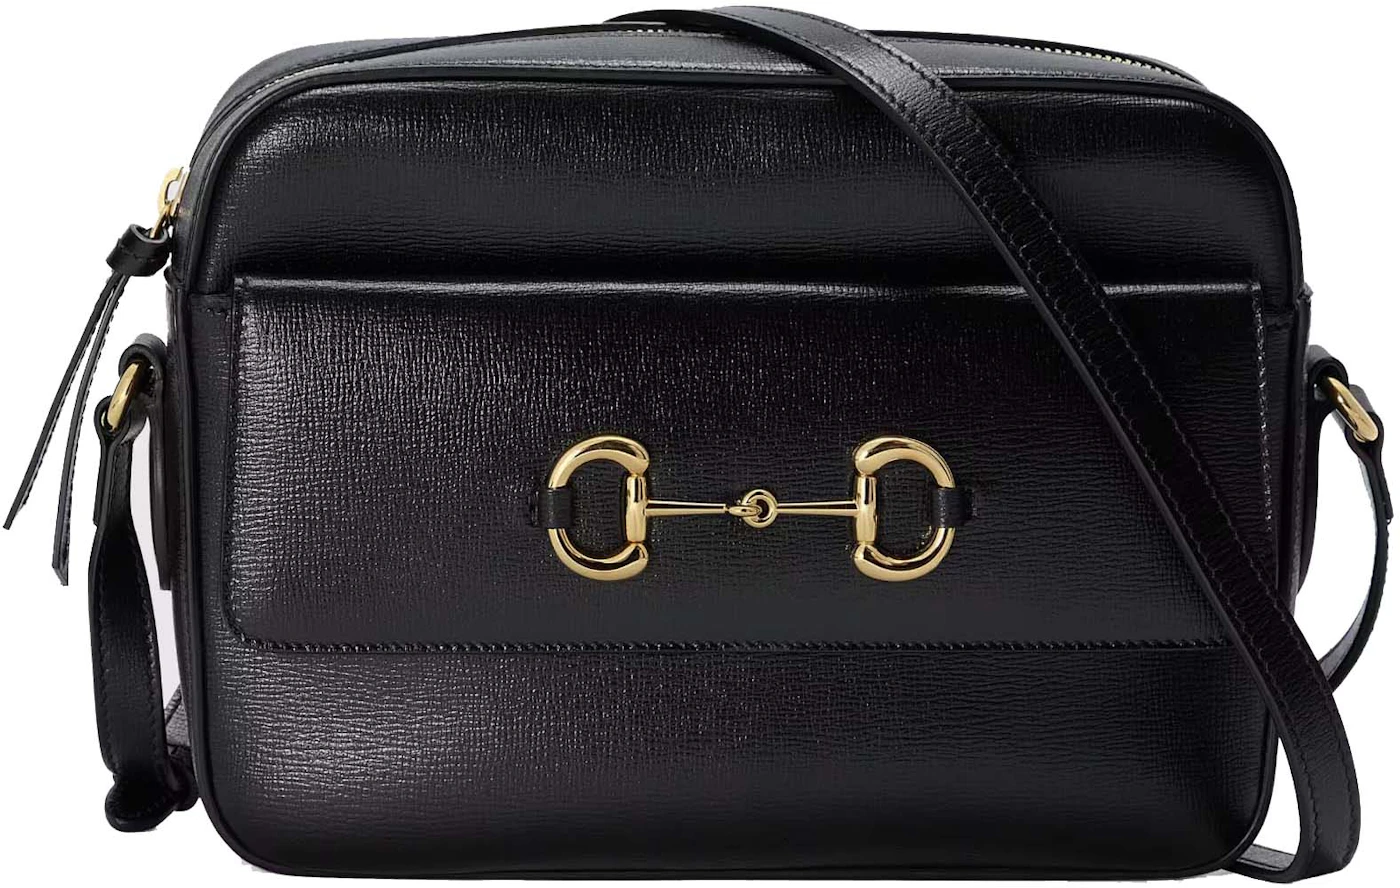 Gucci Horsebit Leather Mini Bag - Black